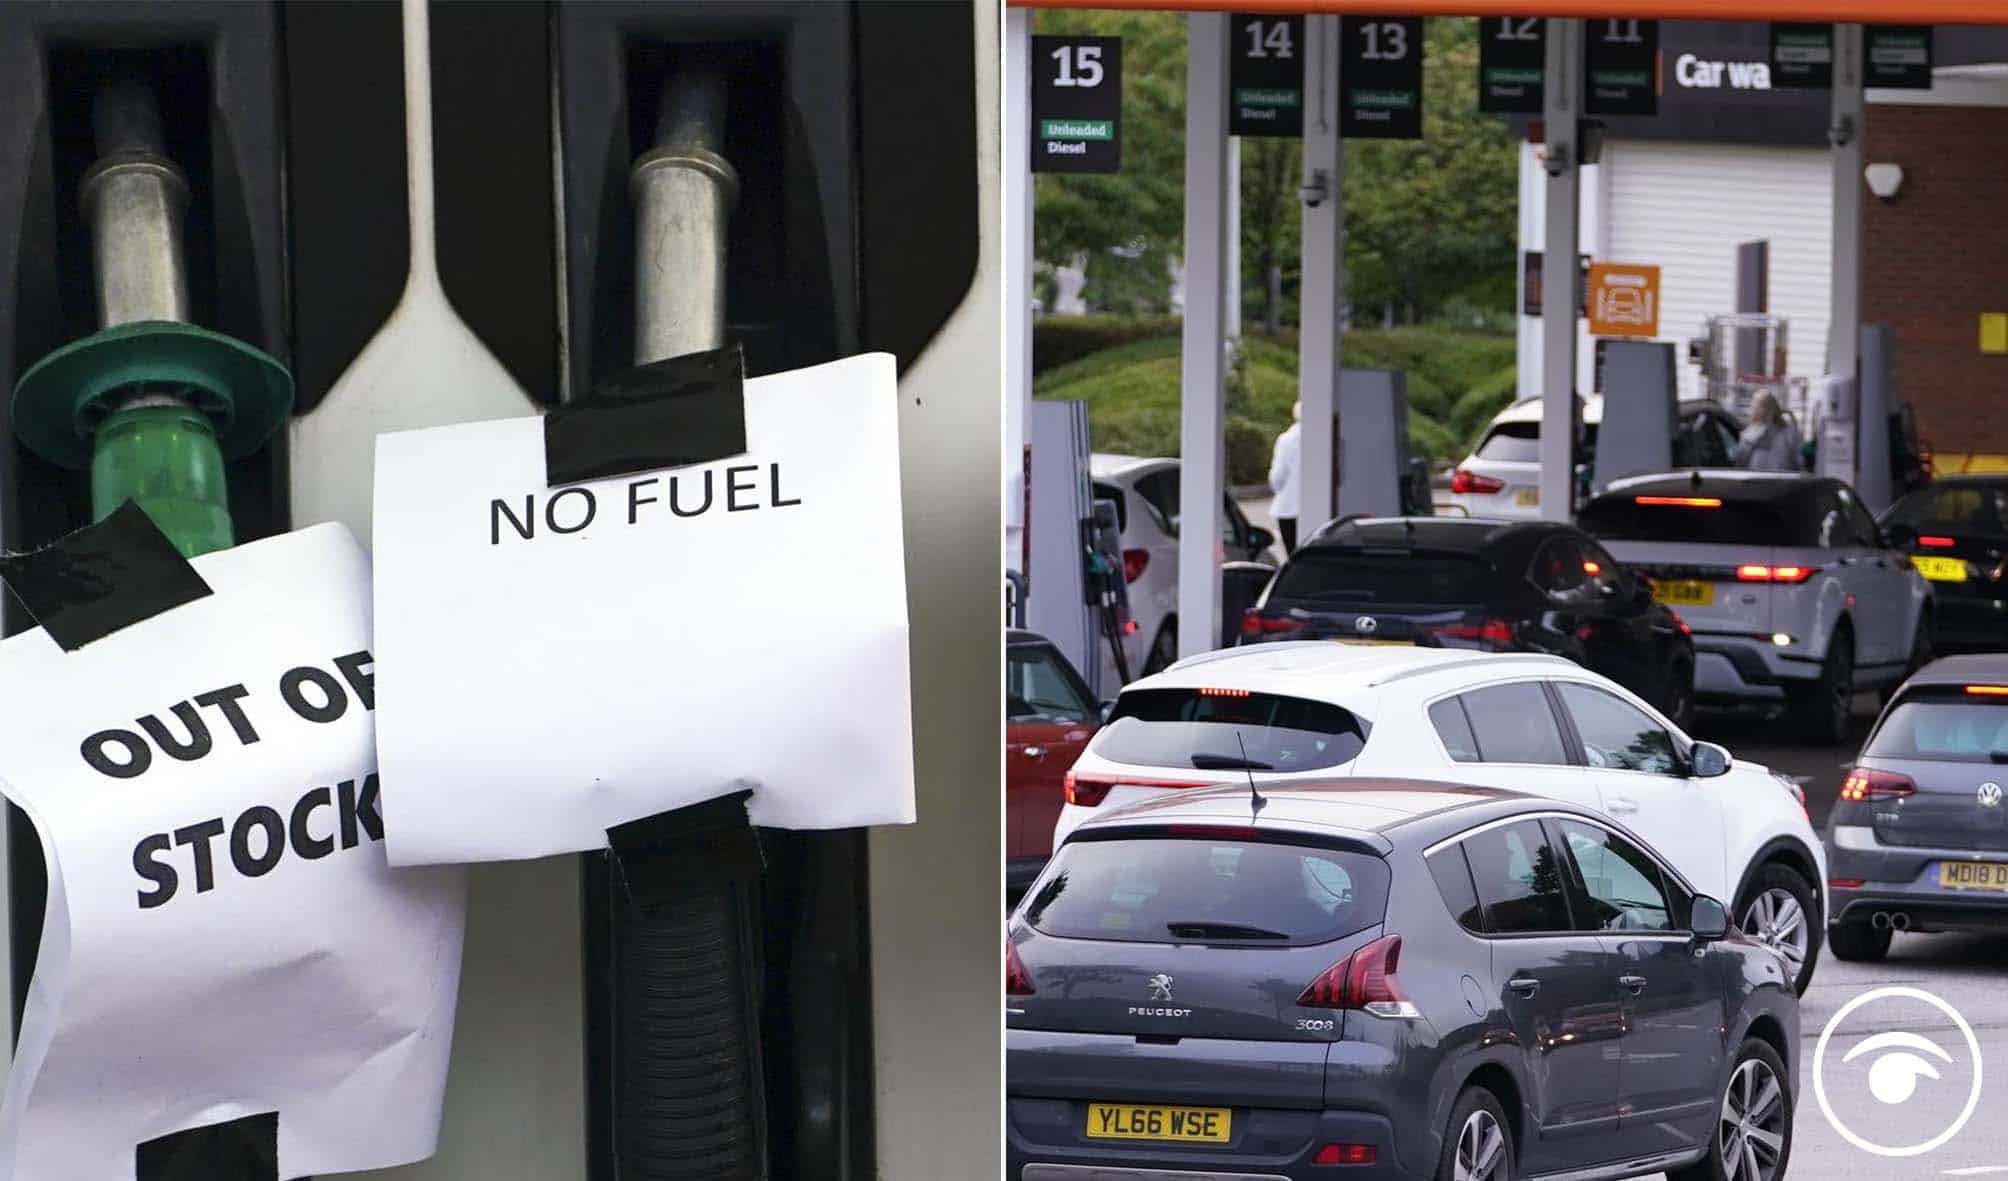 Watch: Hilarious petrol panic song goes viral